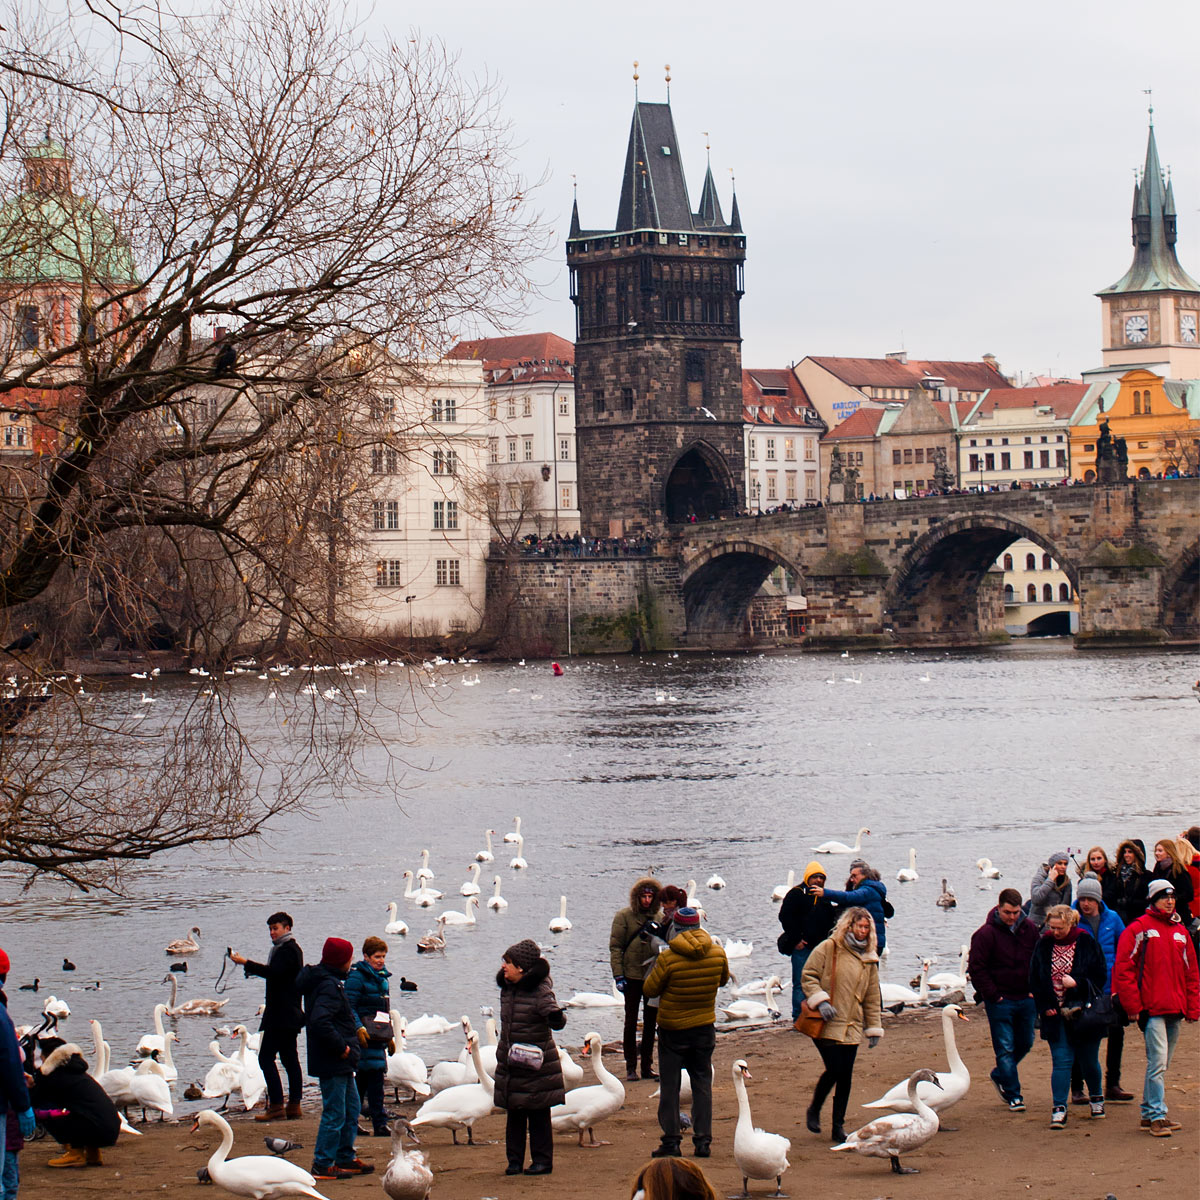 Prague Charles bridge with swans at the river